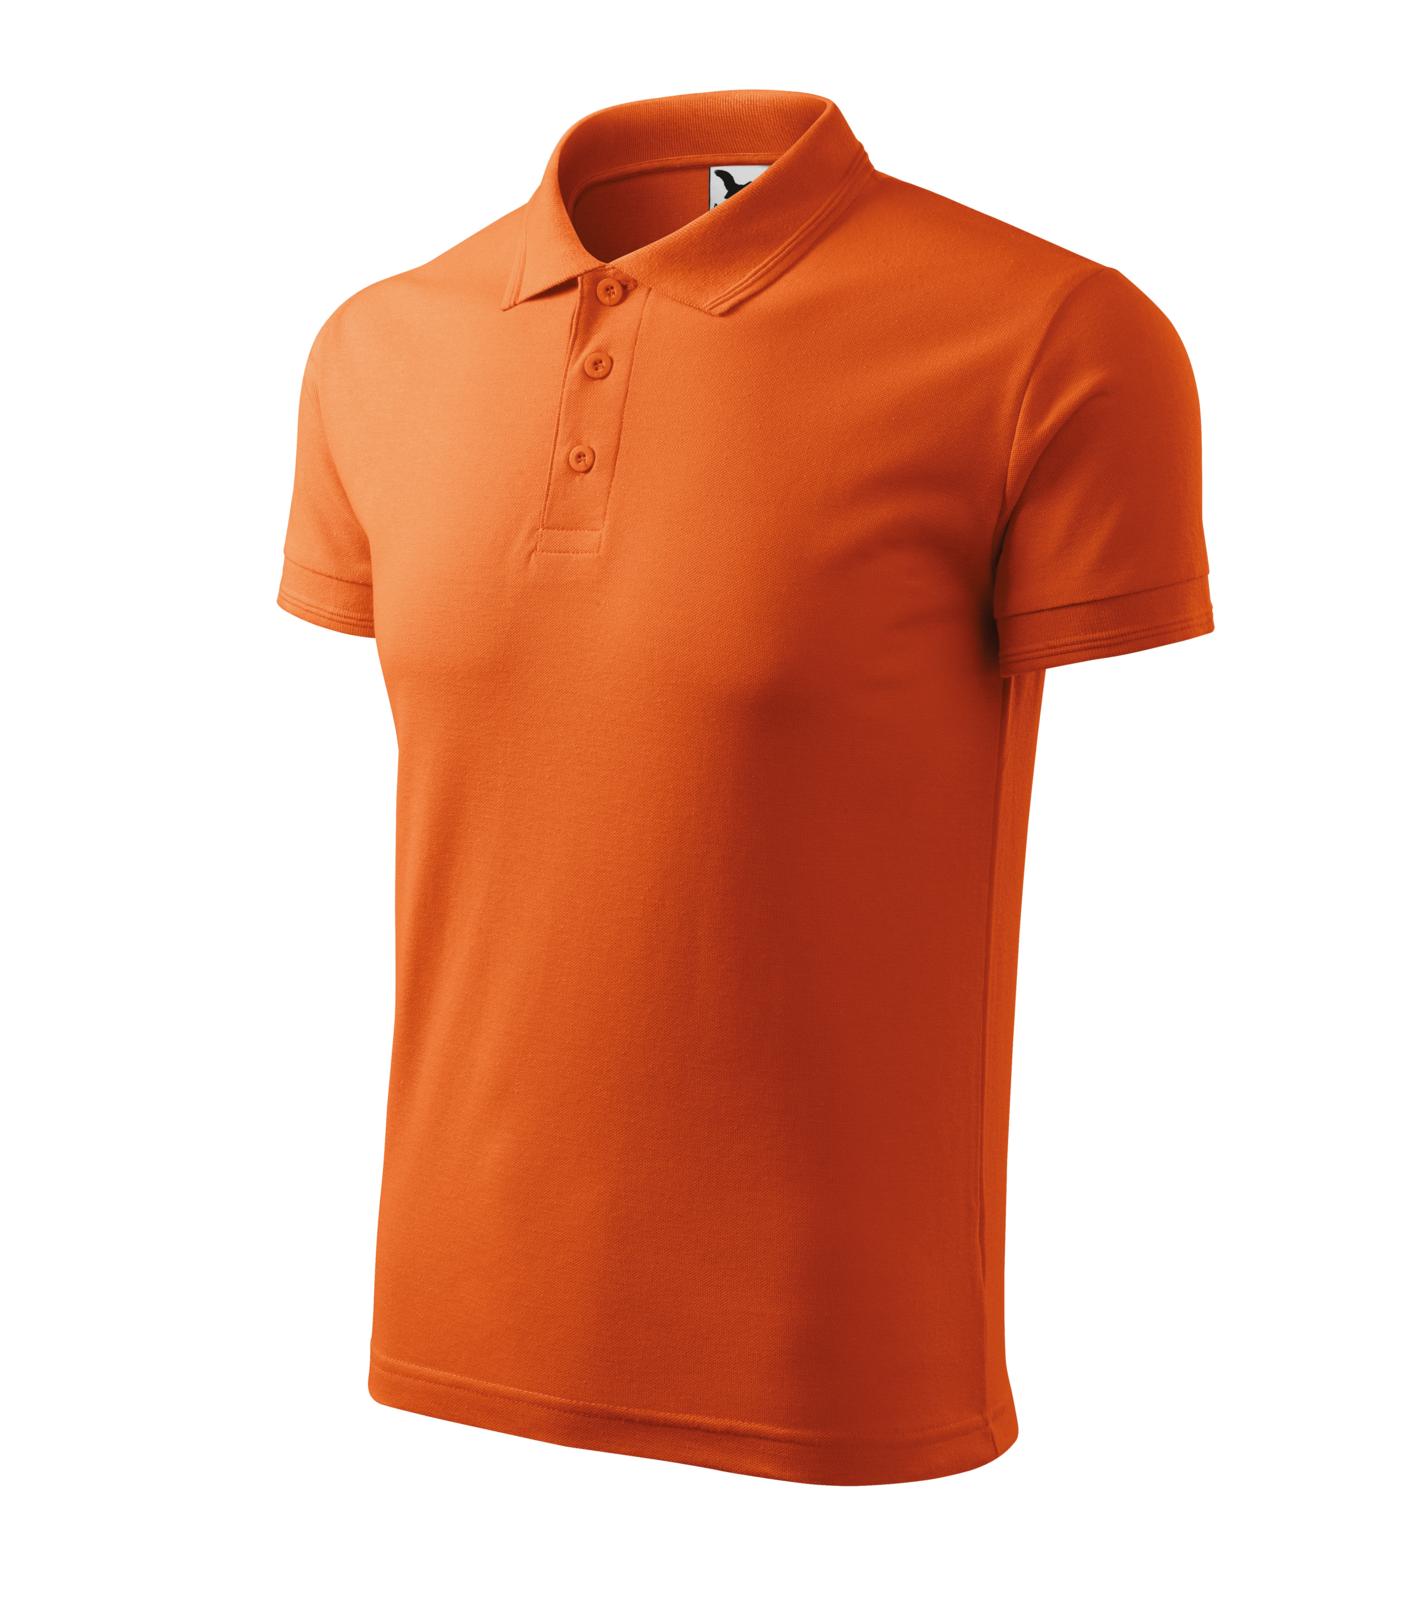 Pique Polo Polokošile pánská Barva: oranžová, Velikost: 4XL